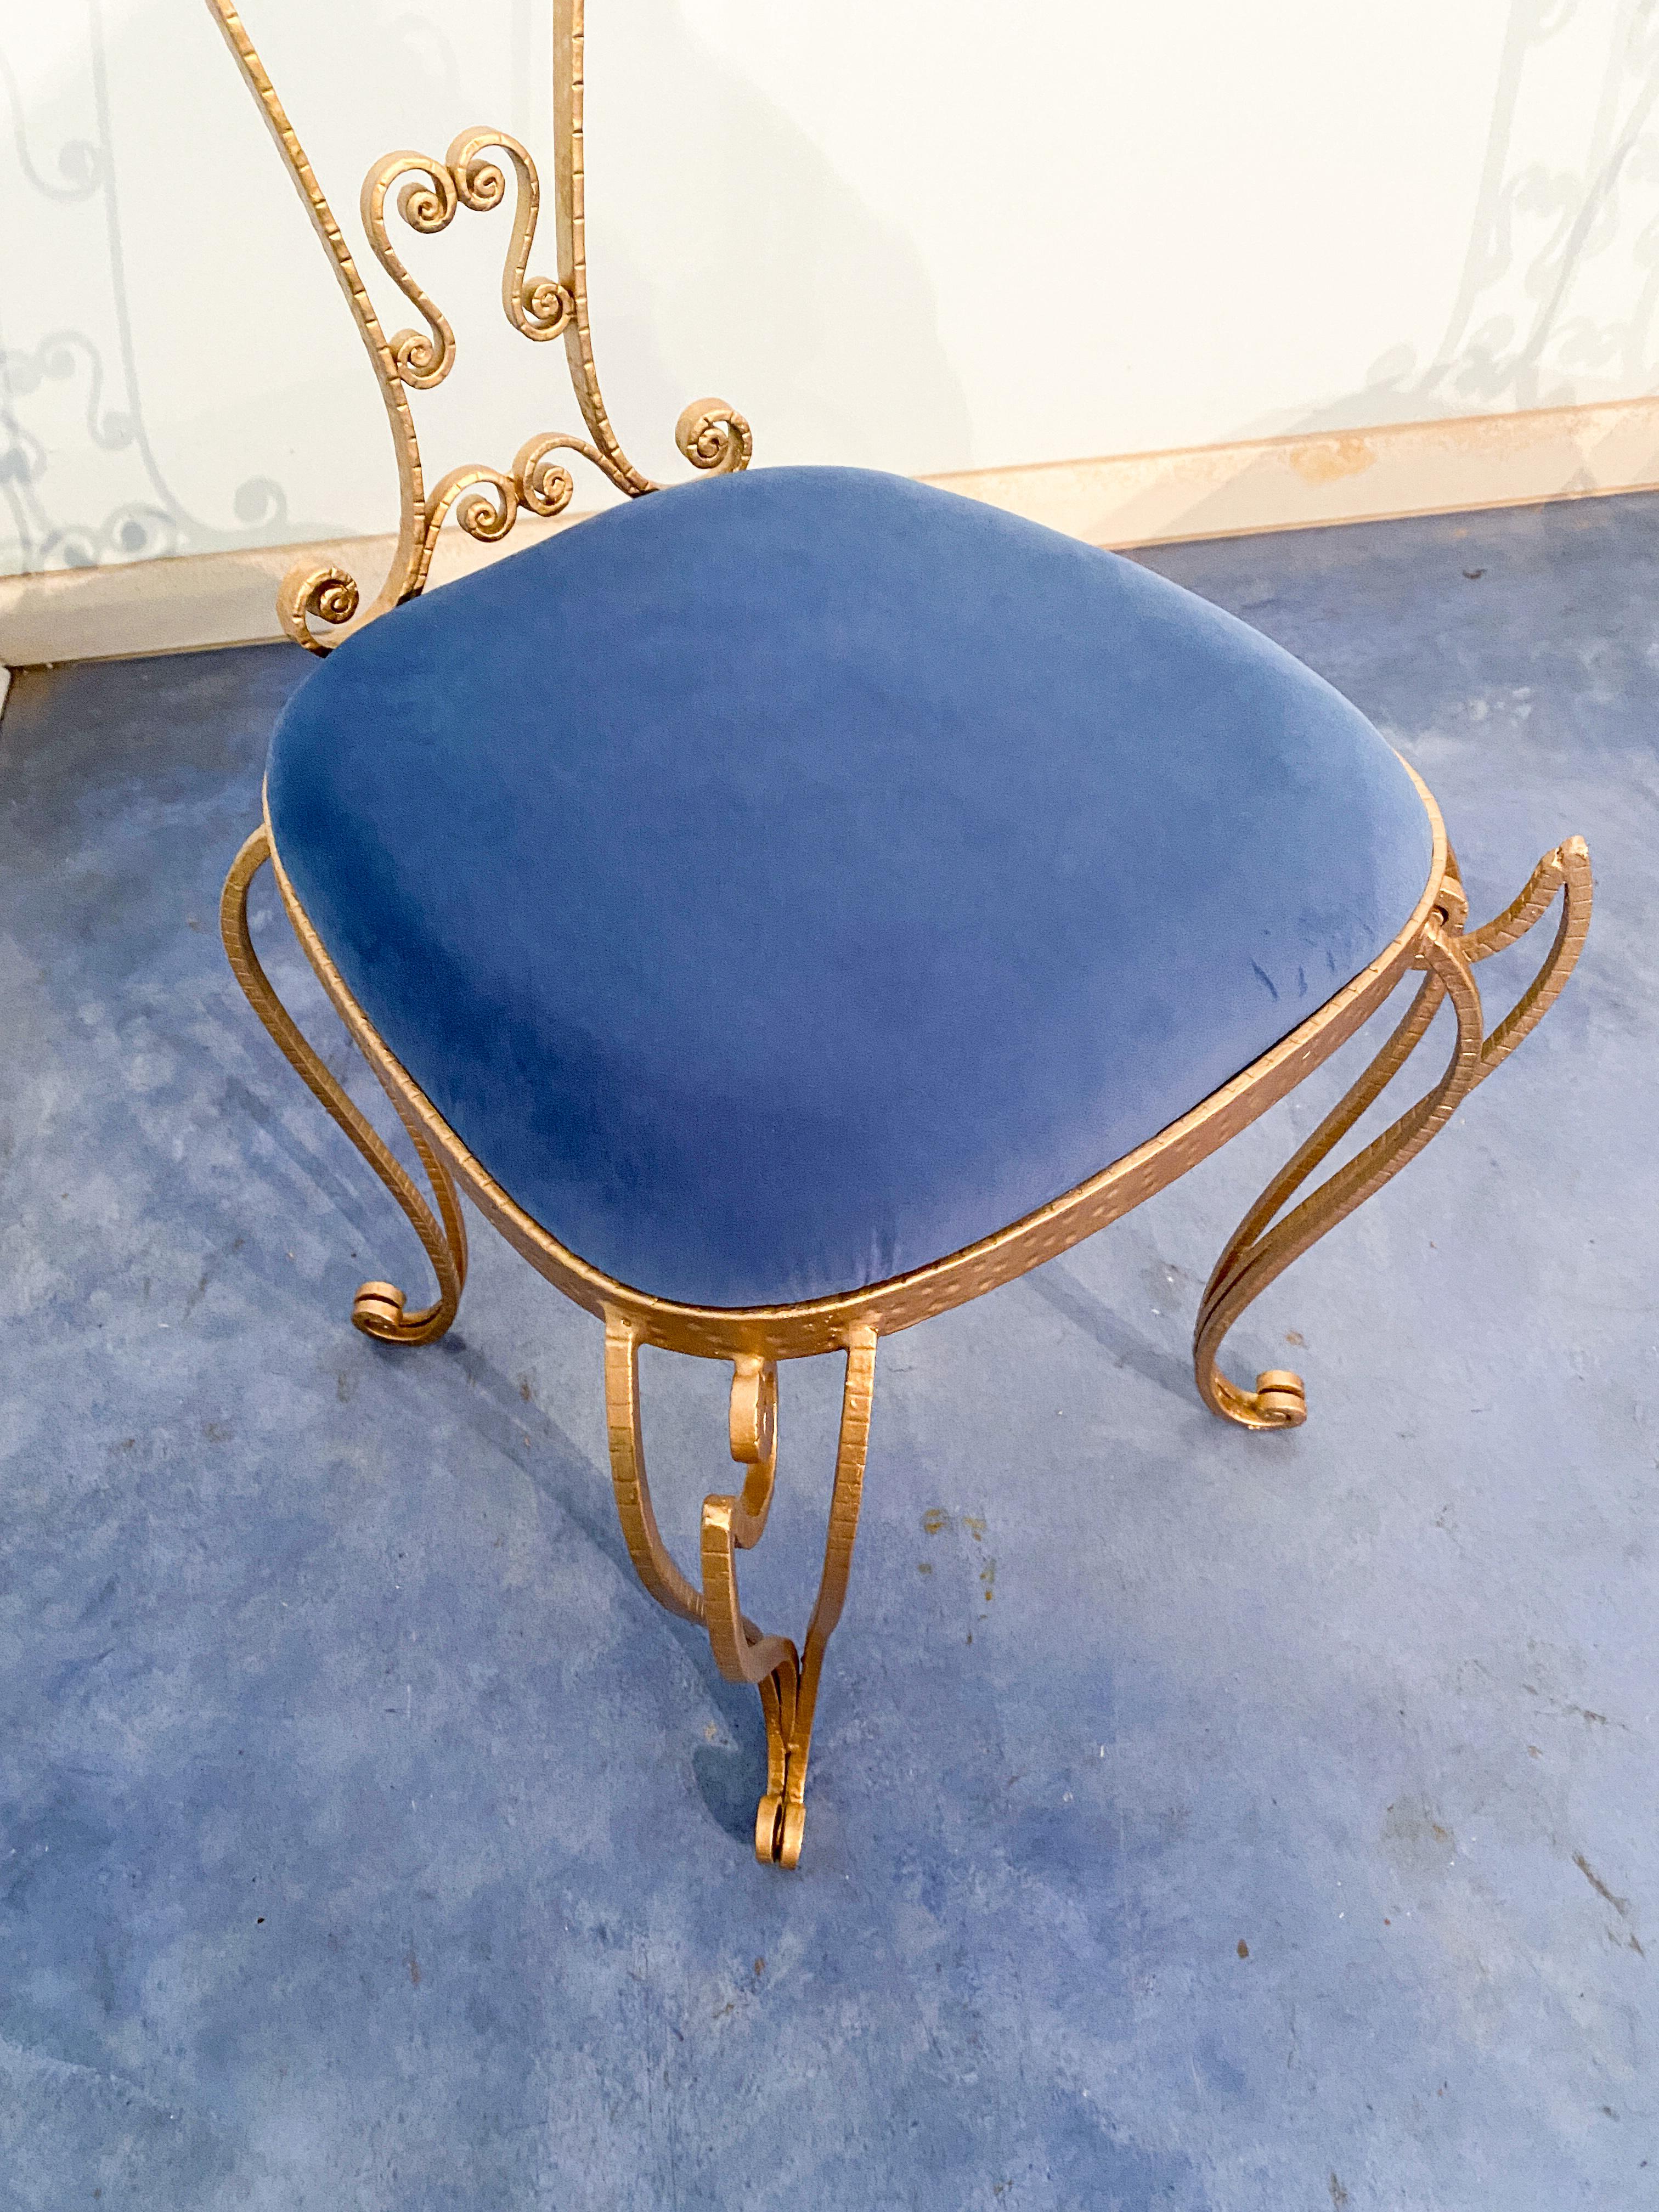 Pair of Italian Mid-Century Modern Luigi Colli Gold Iron Vanity Chairs, 1950s For Sale 2